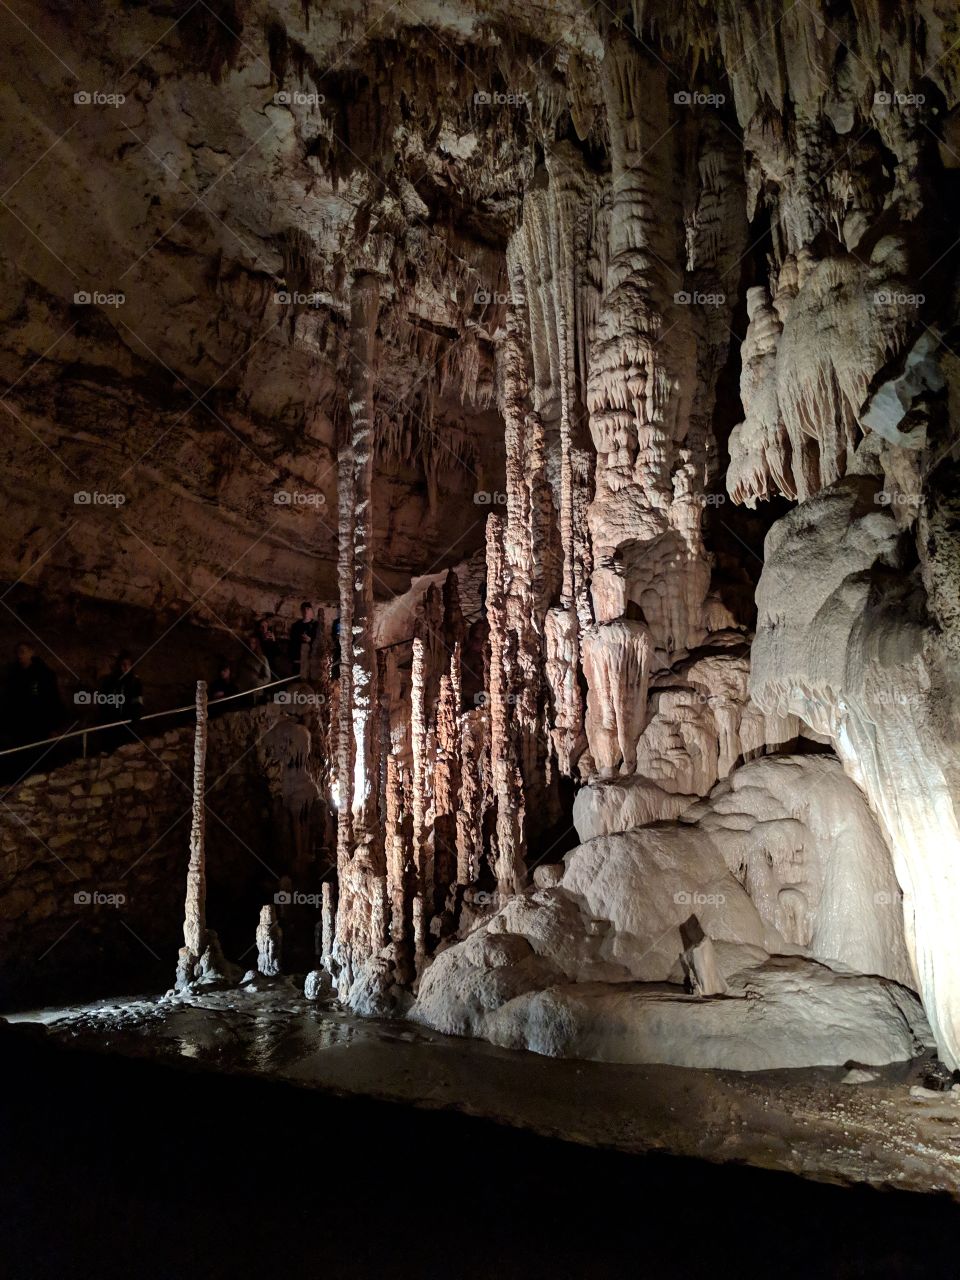 San Antonio Cave